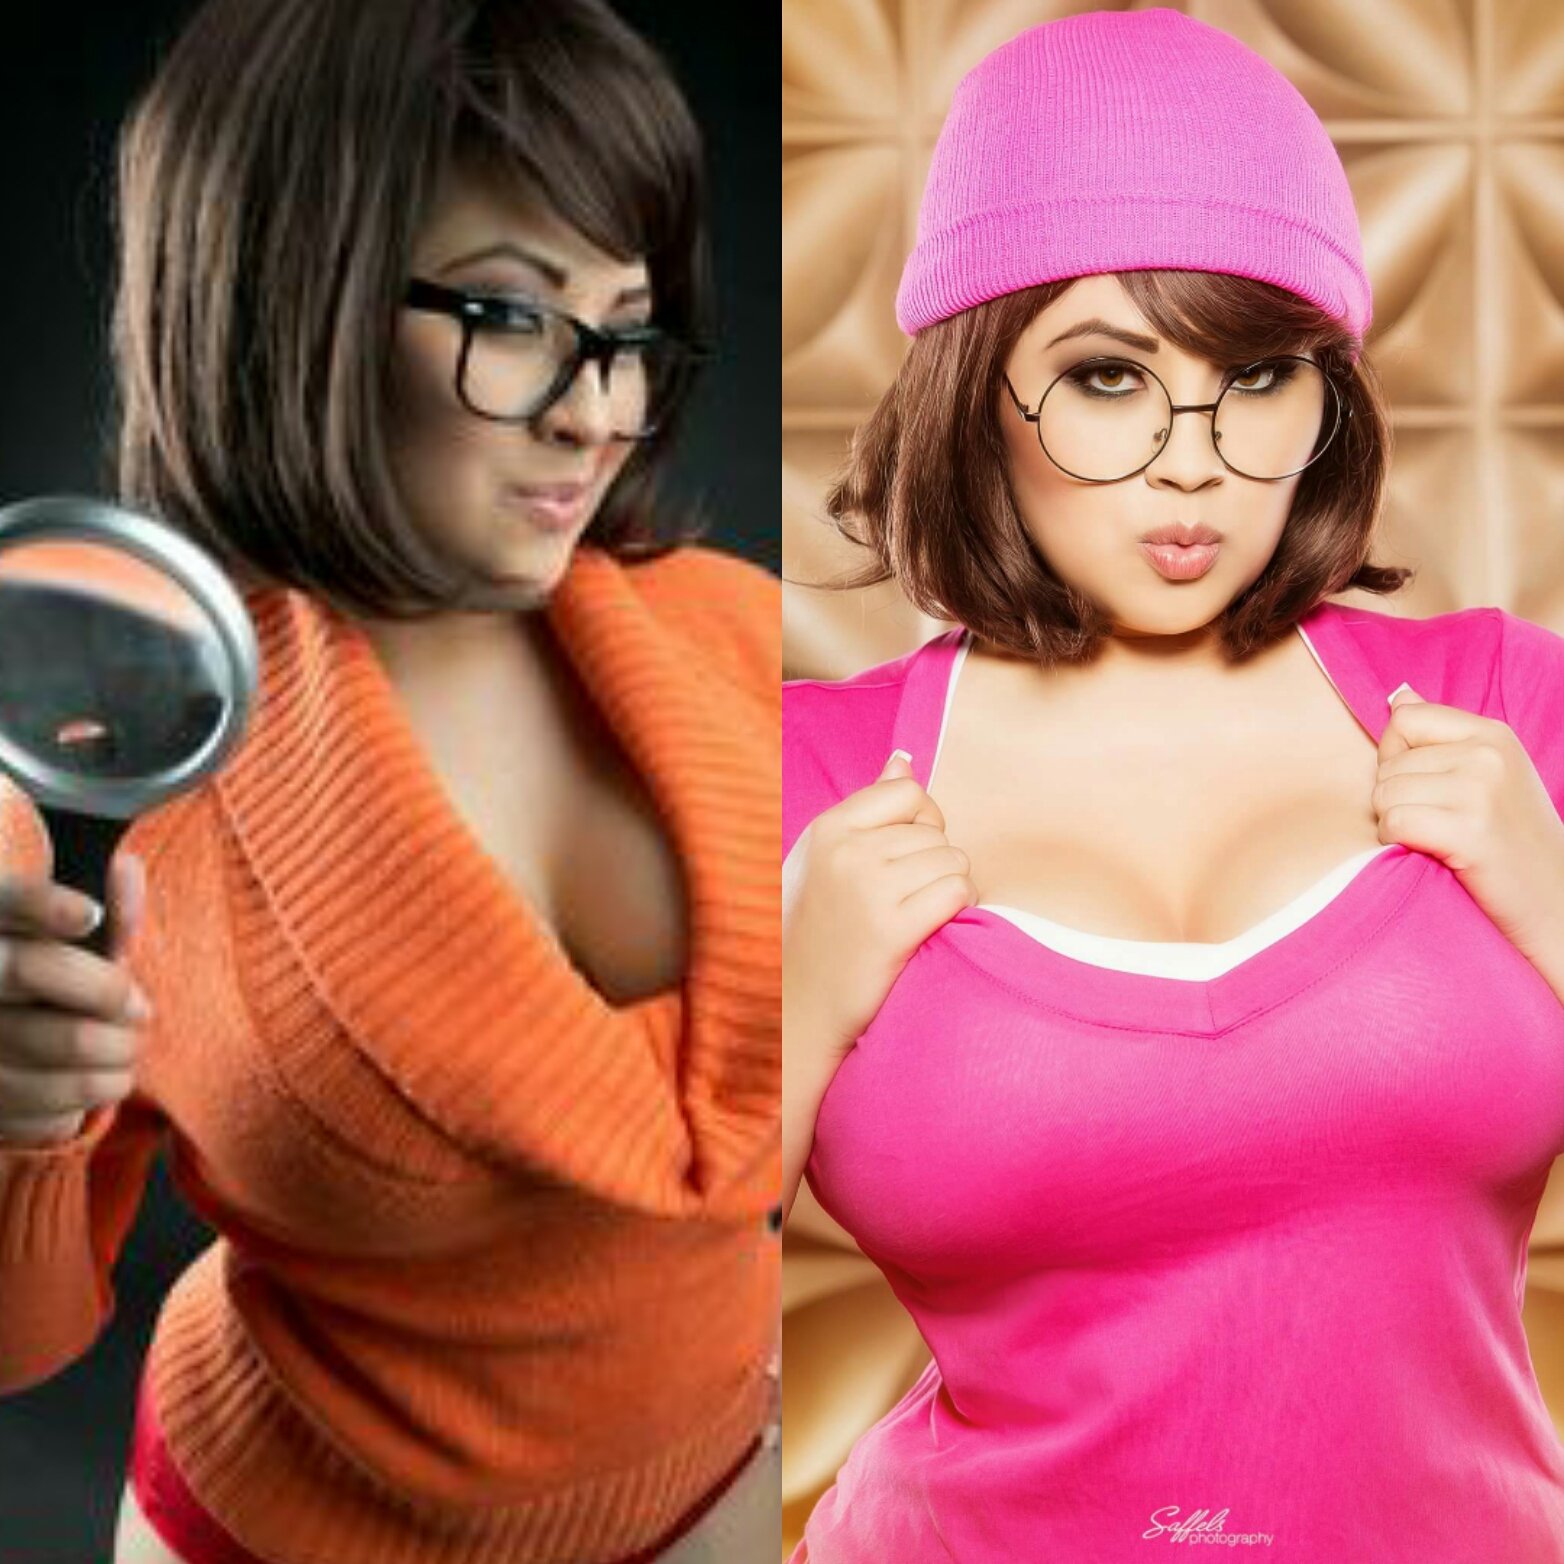 “Velma or Meg?
Pick one!
#ivydoomkitty” 